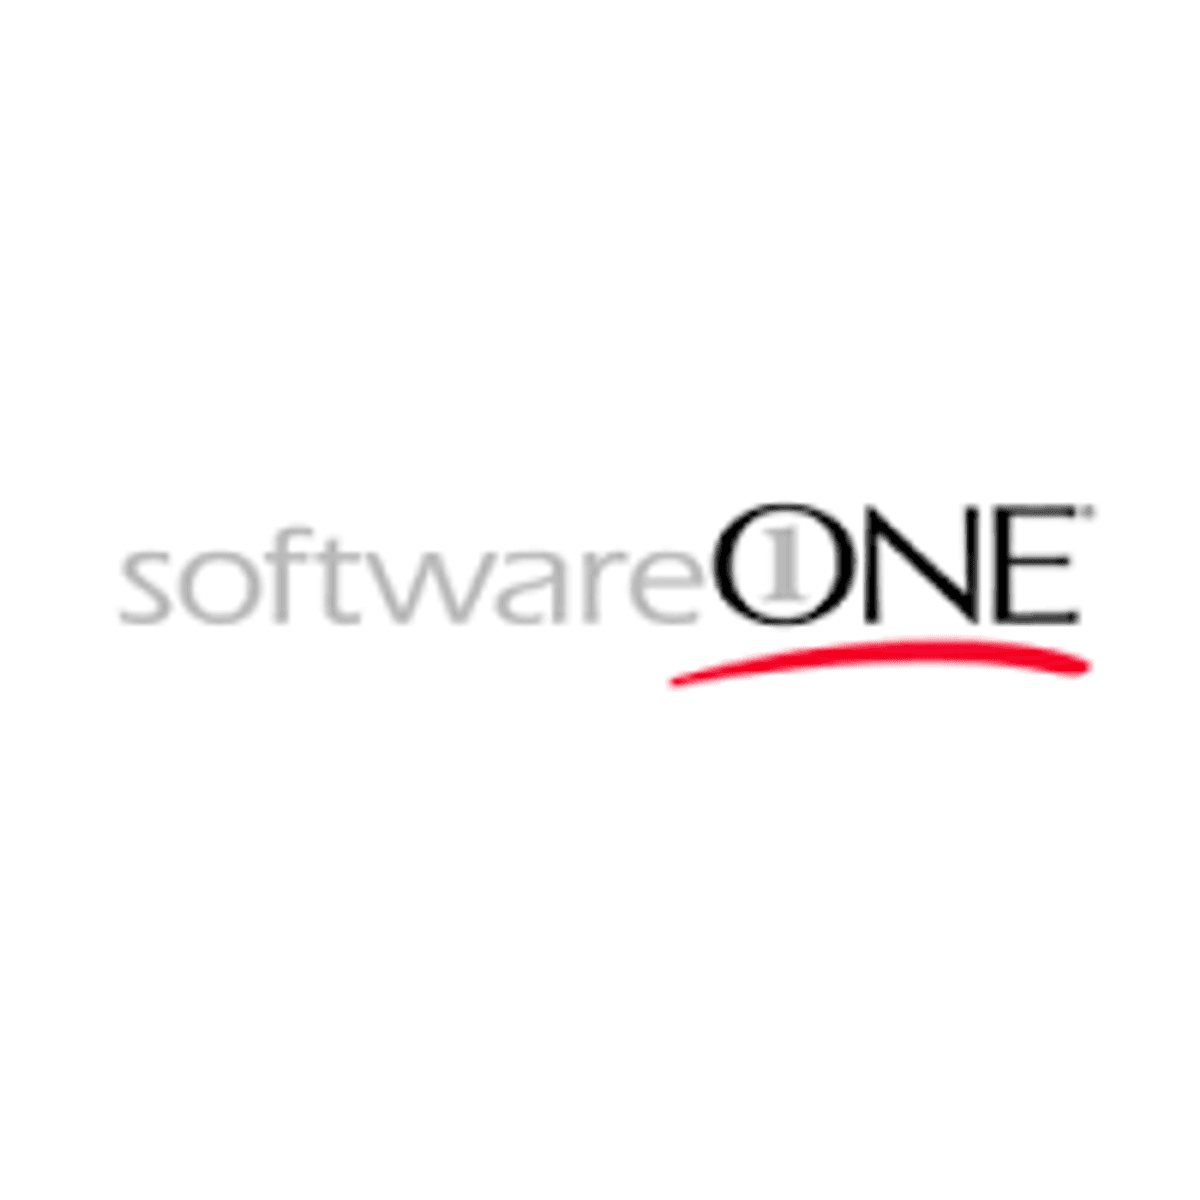 SoftwareONE koopt SAP-specialist Optimum Consulting image